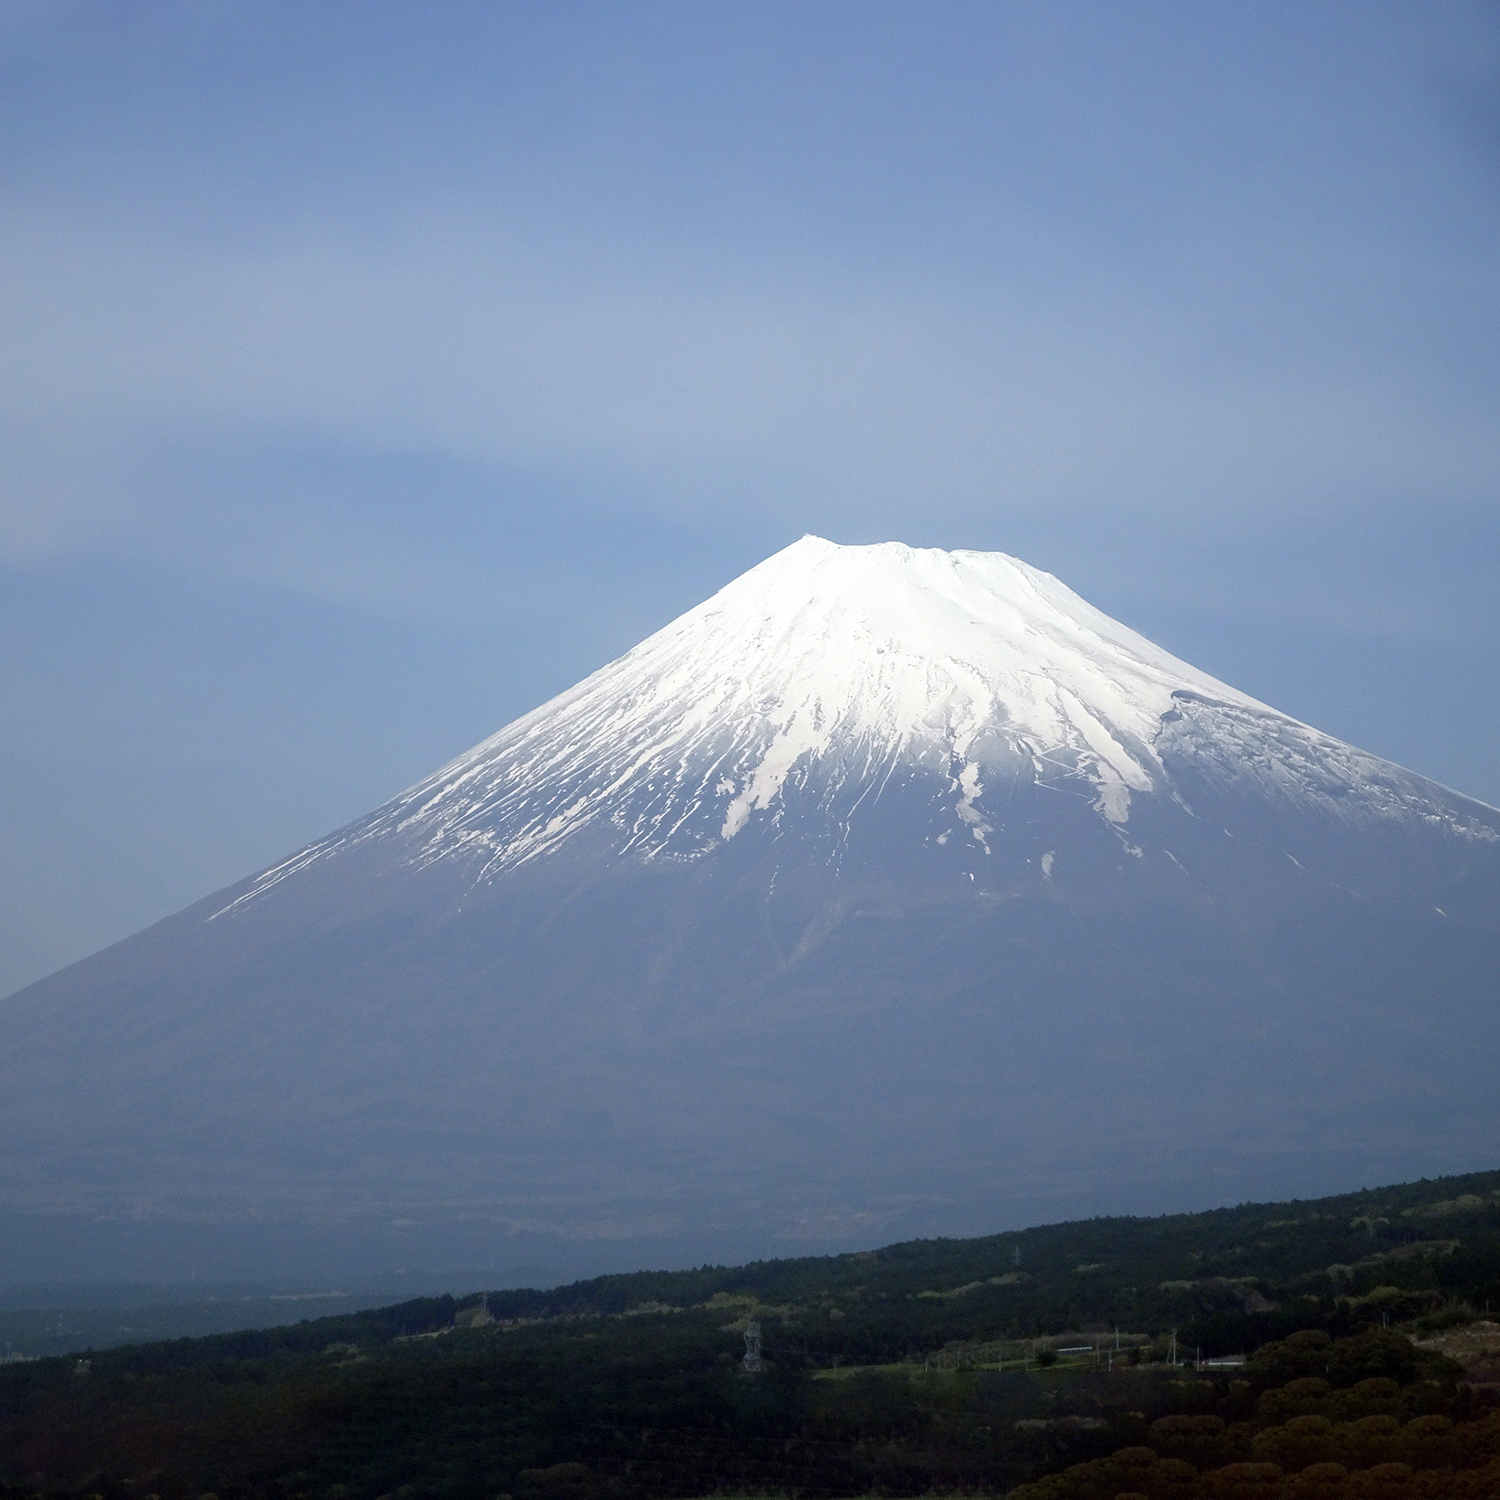 Il Monte Fuji visto dallo Shinkasen